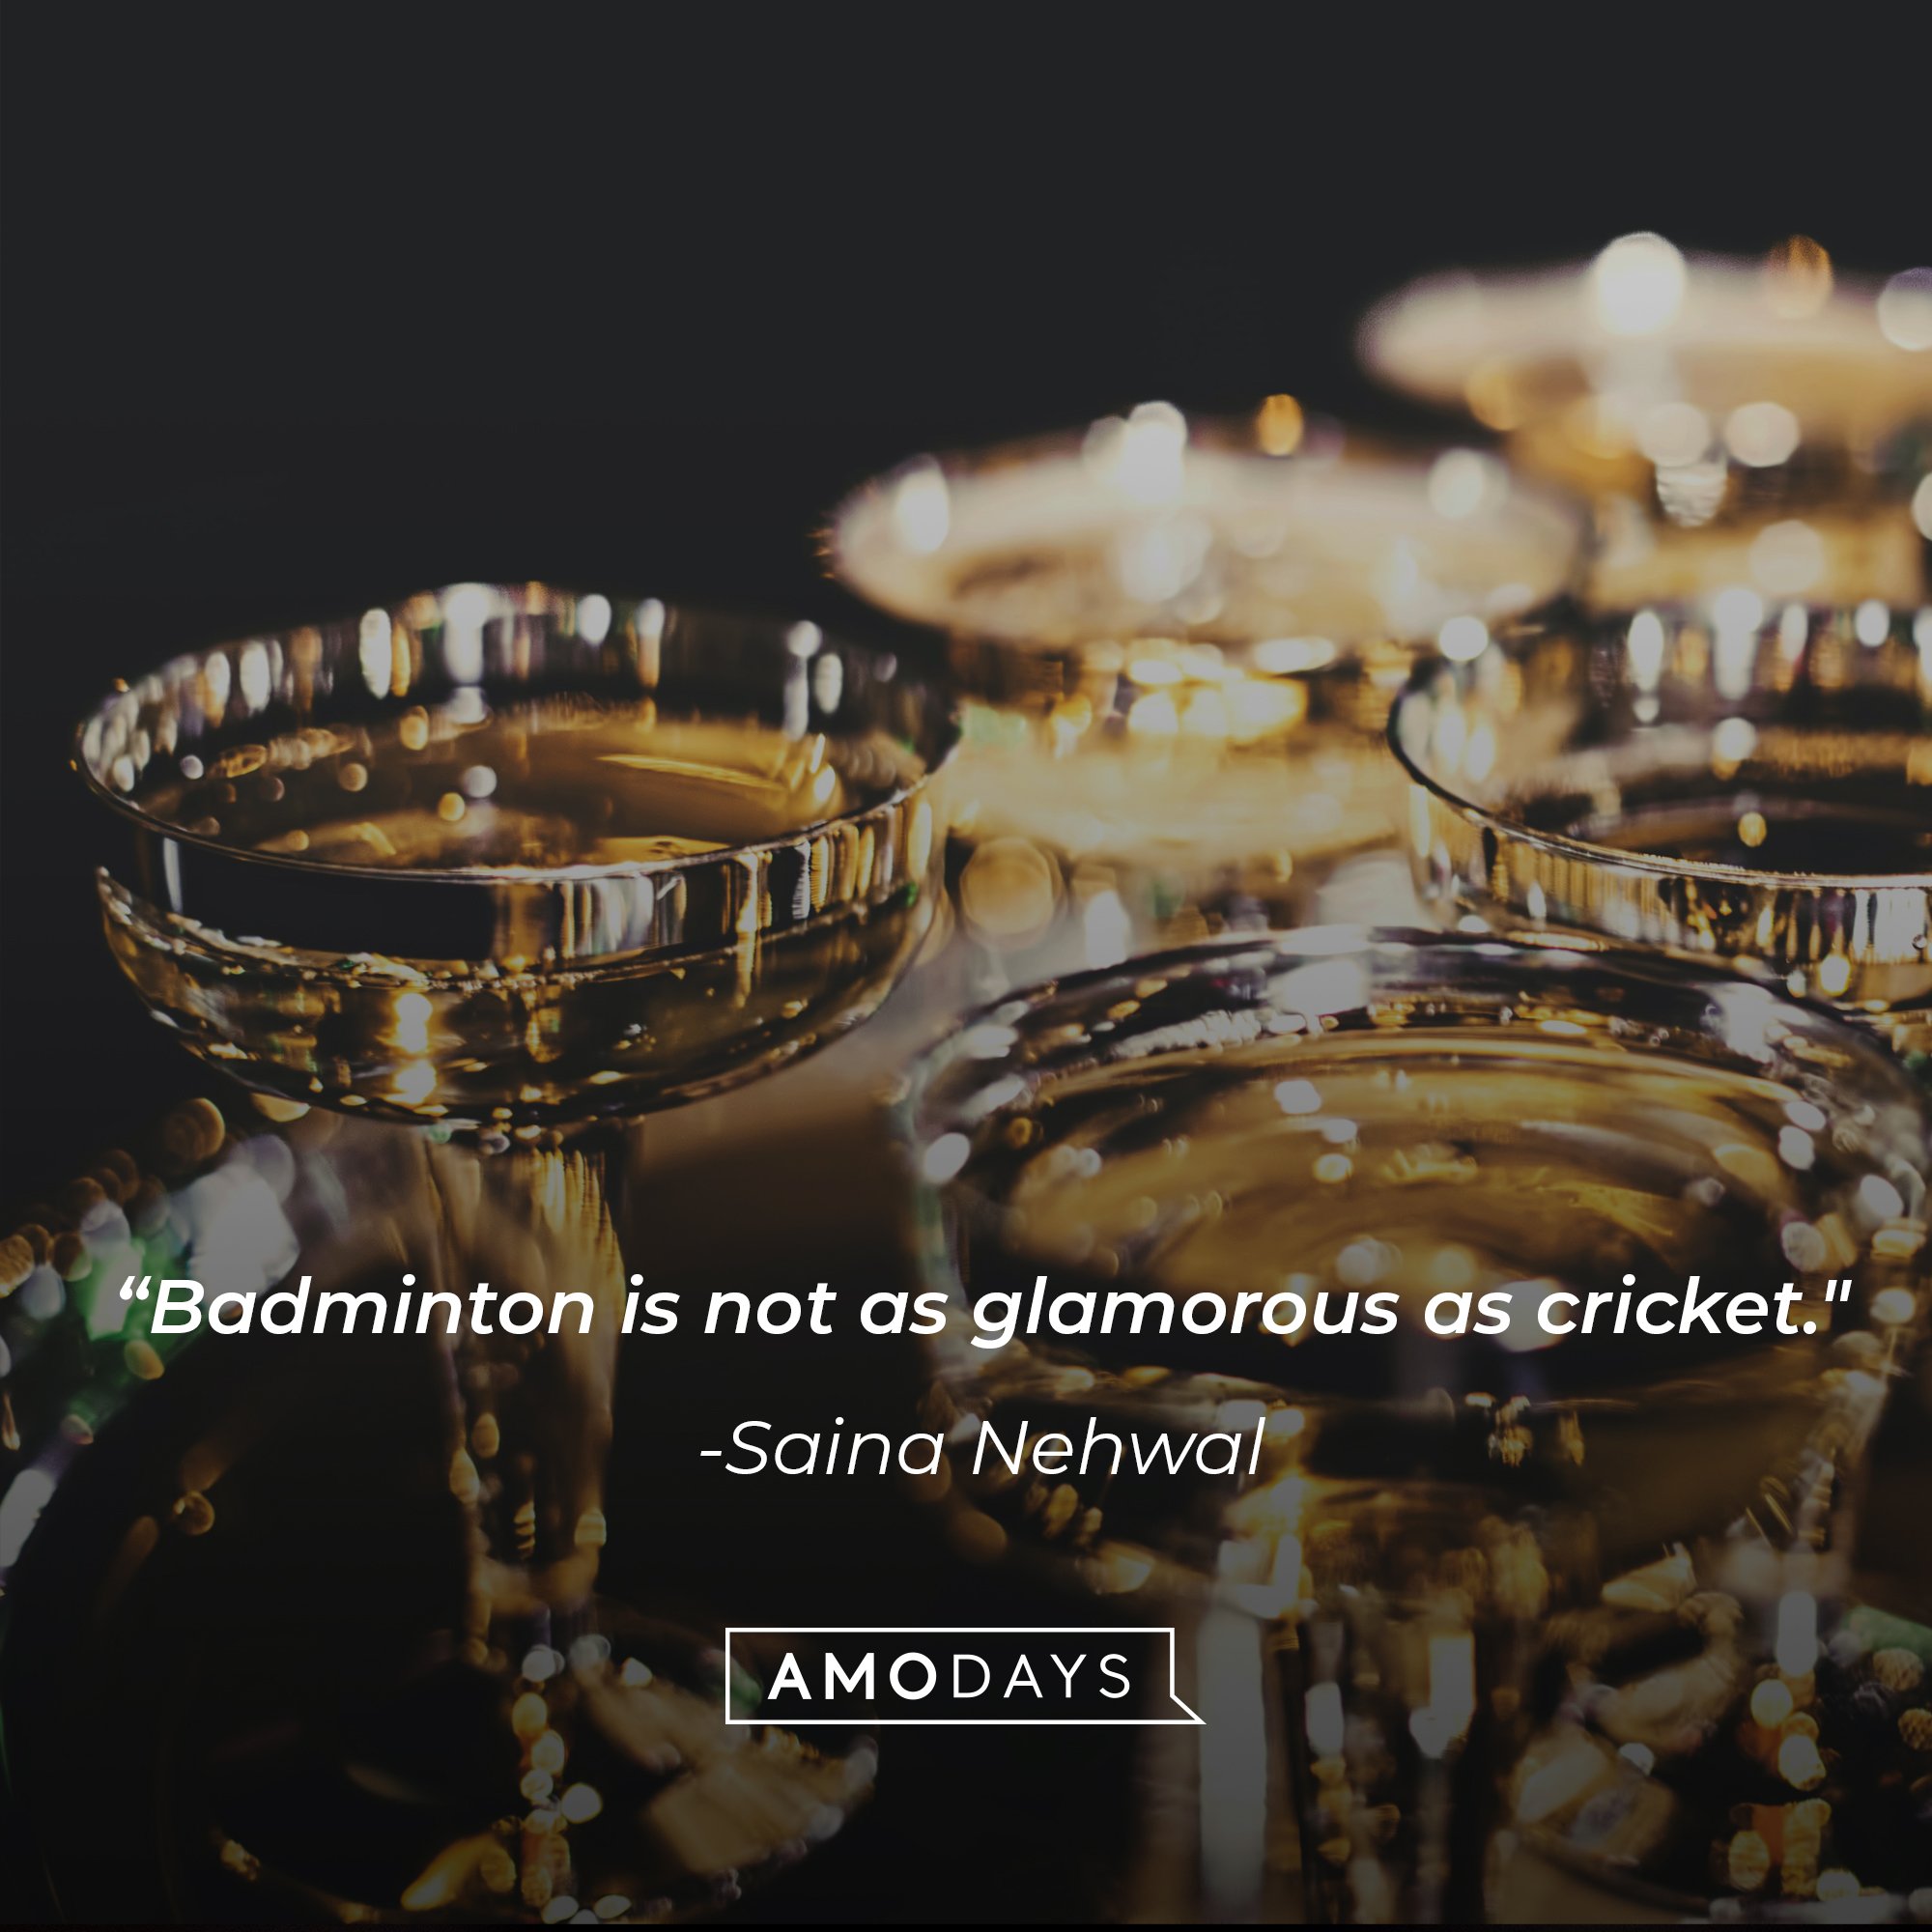 Saina Nehwal’s quote: "Badminton is not as glamorous as cricket." | Image: AmoDays